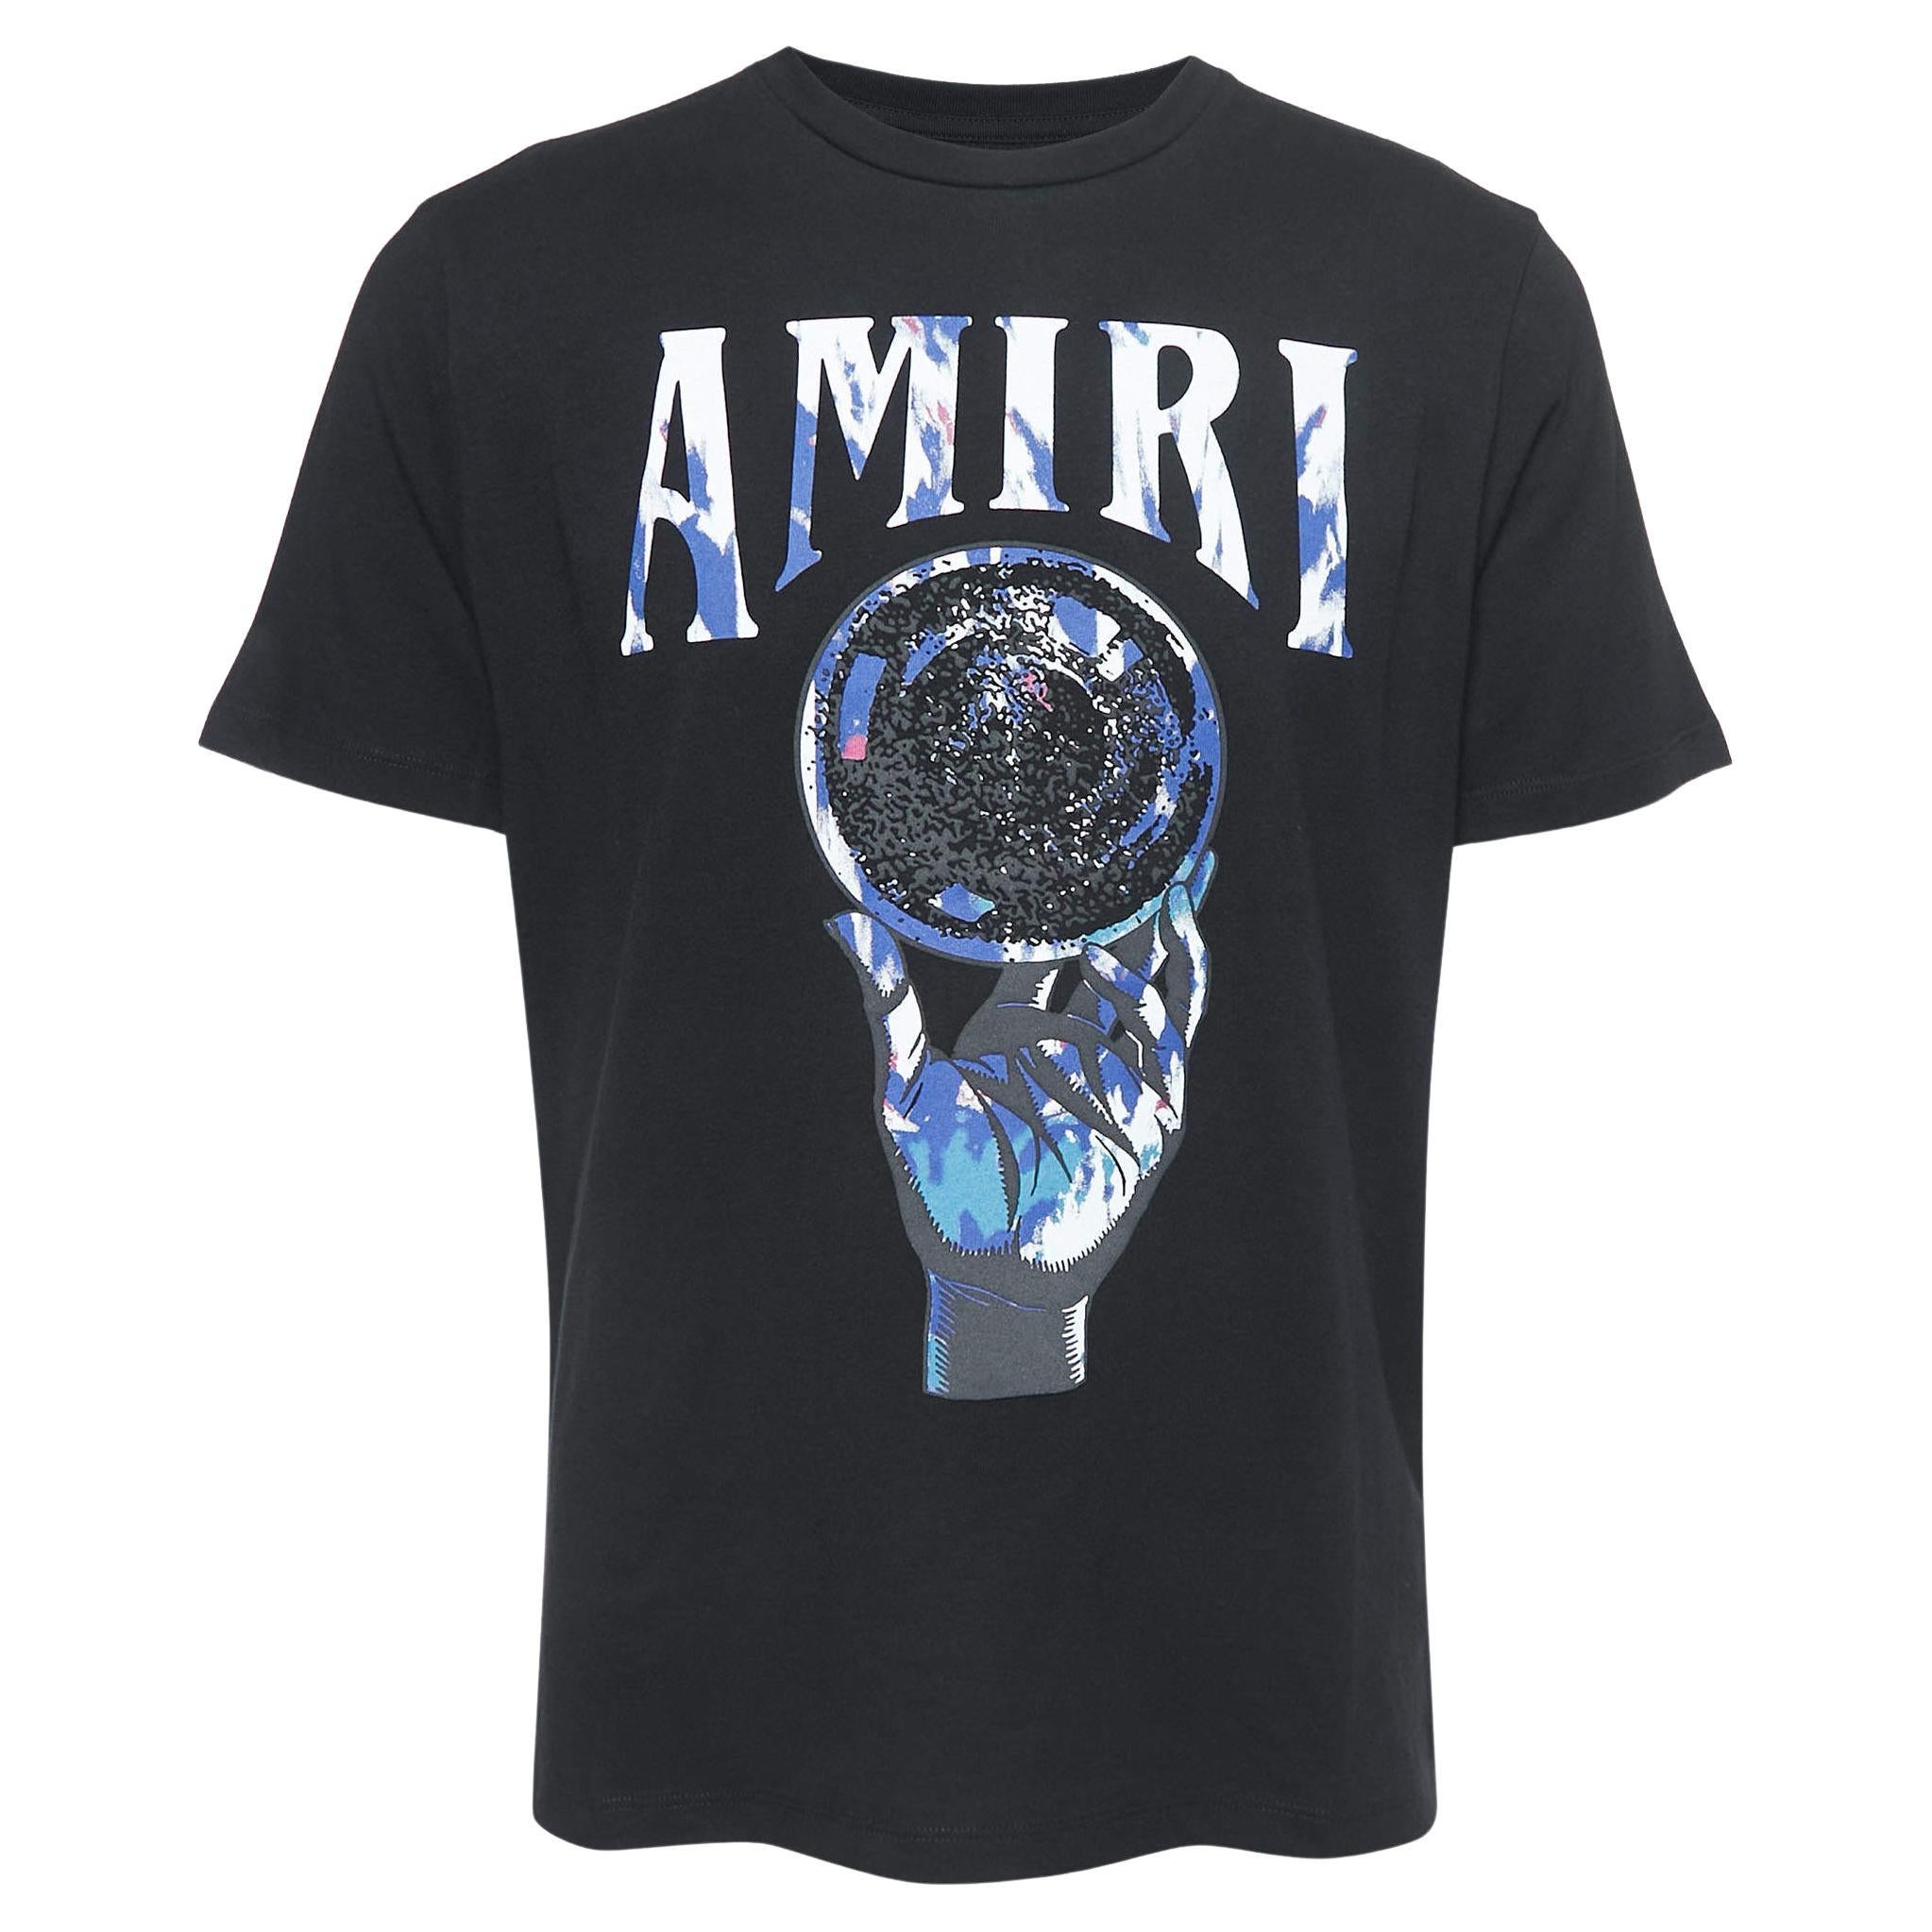 Amiri Black Cotton Crystal Ball Print T-Shirt M For Sale